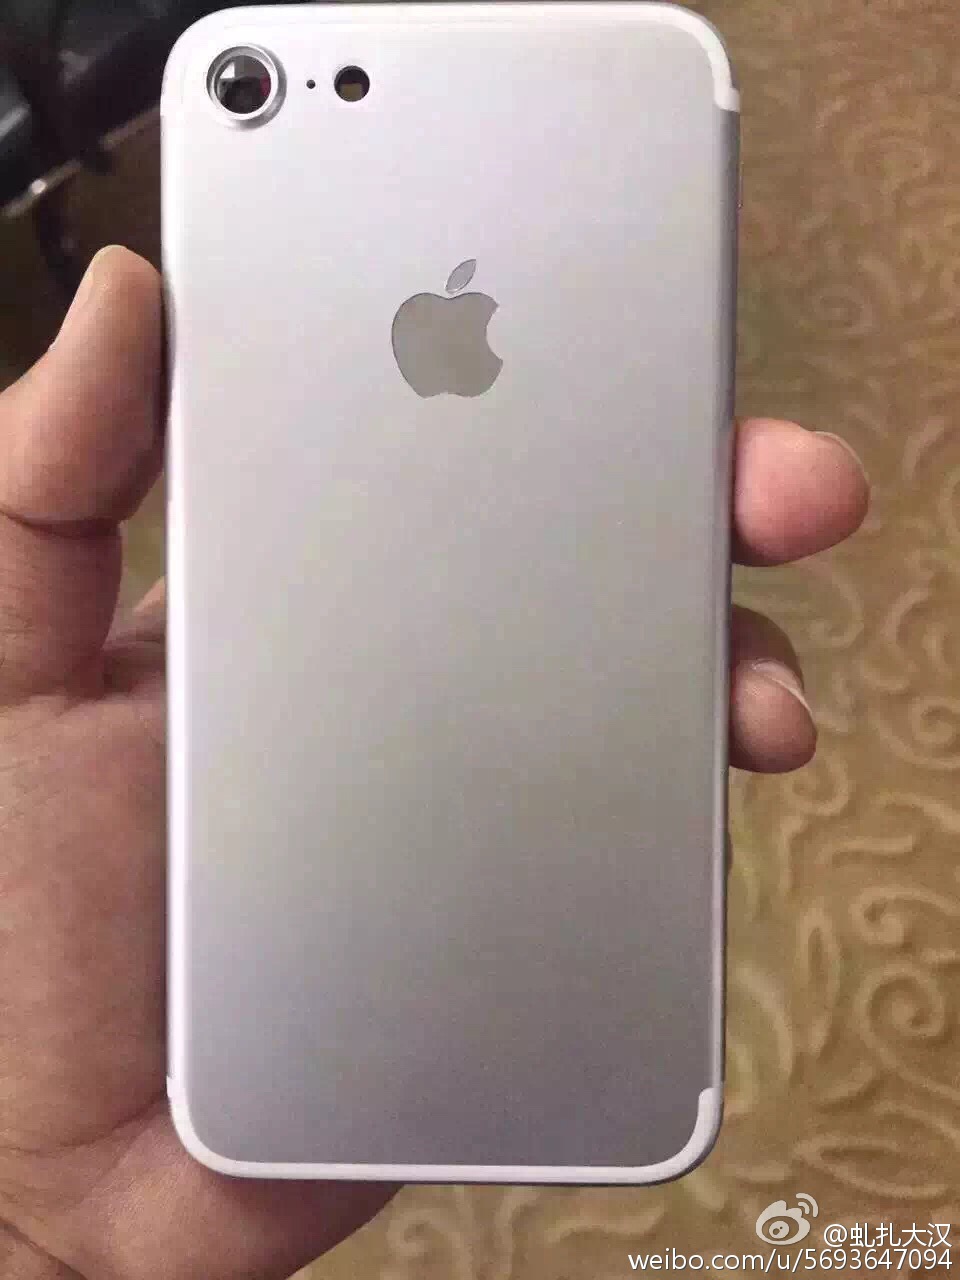 Leaked iPhone 7 Photo Reveals Protruding Camera? 